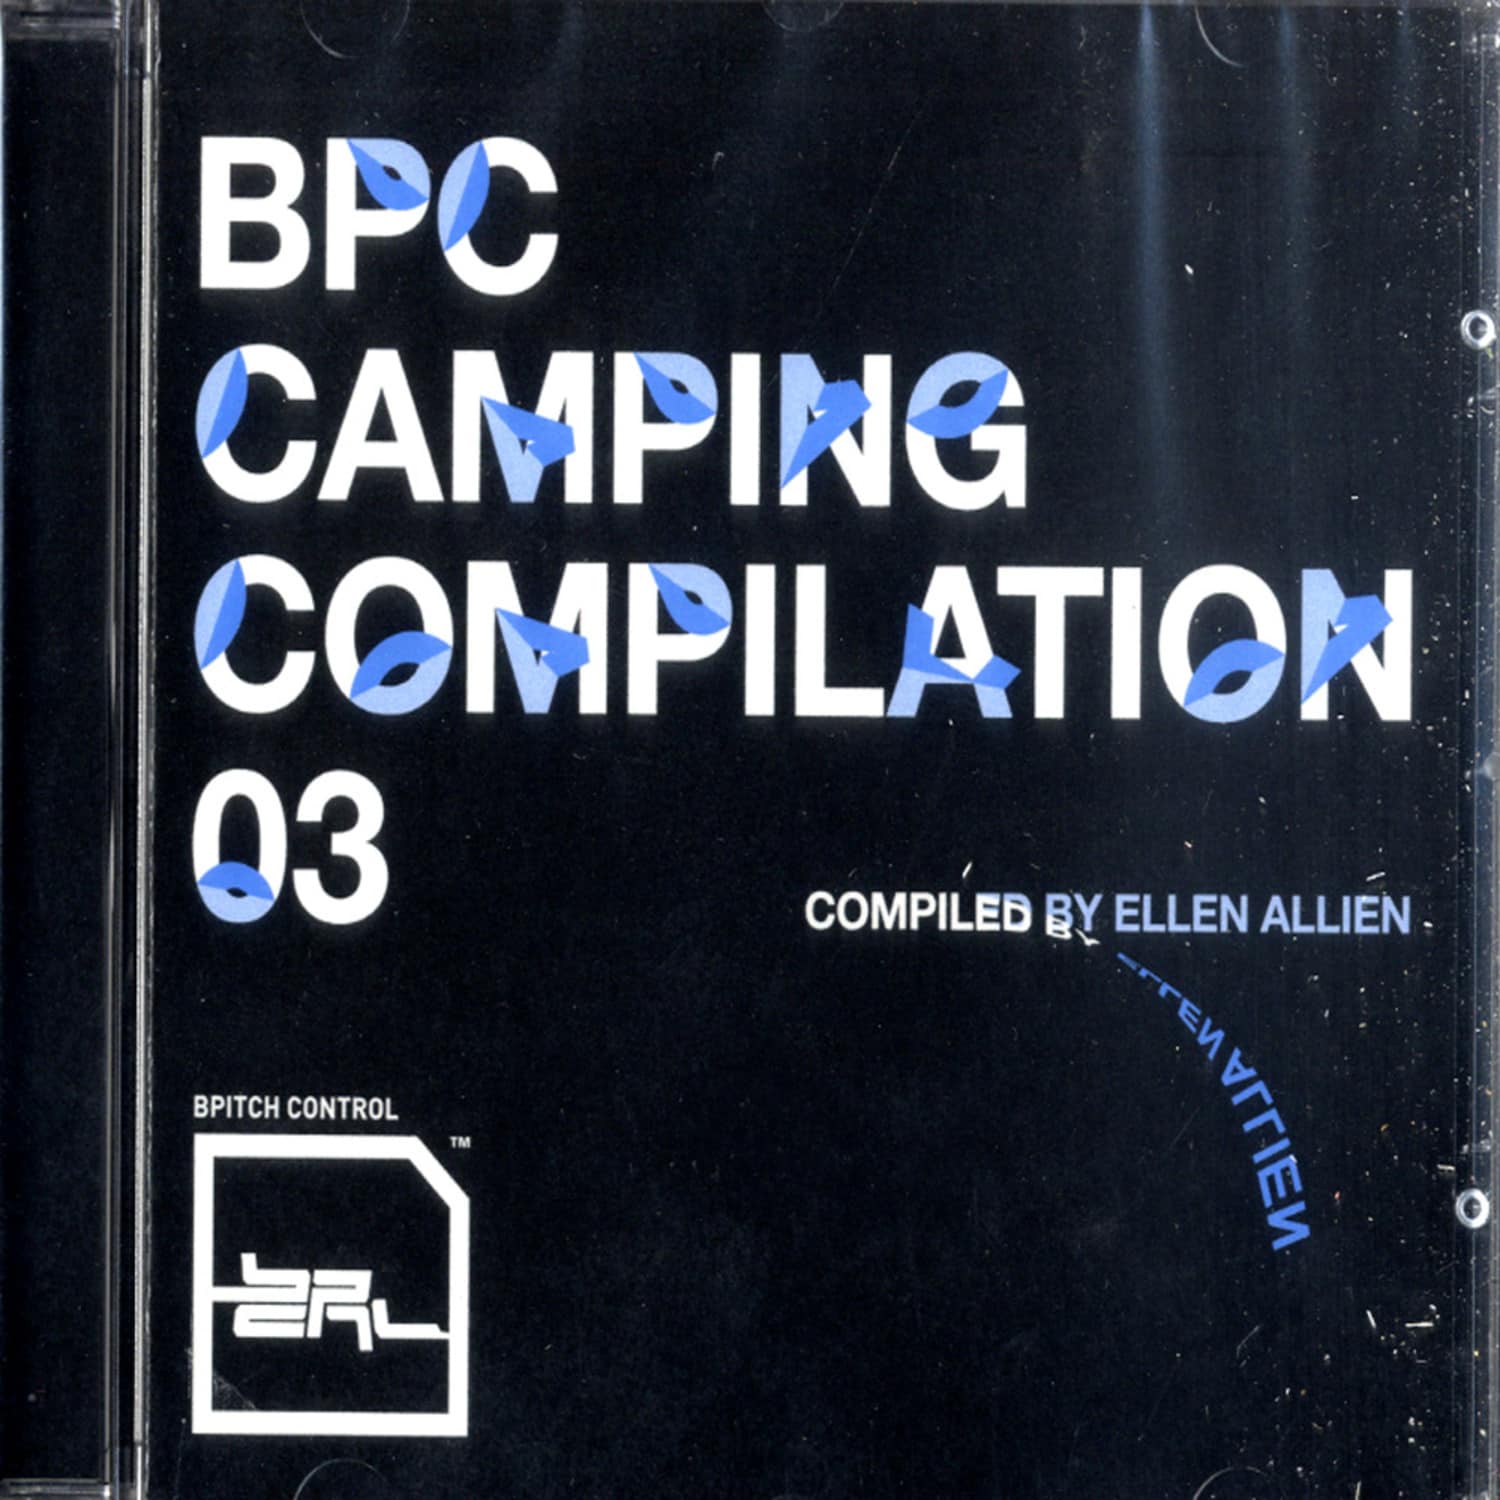 V/A compiled by Ellen Allien - BPC Camping Compilation 03 